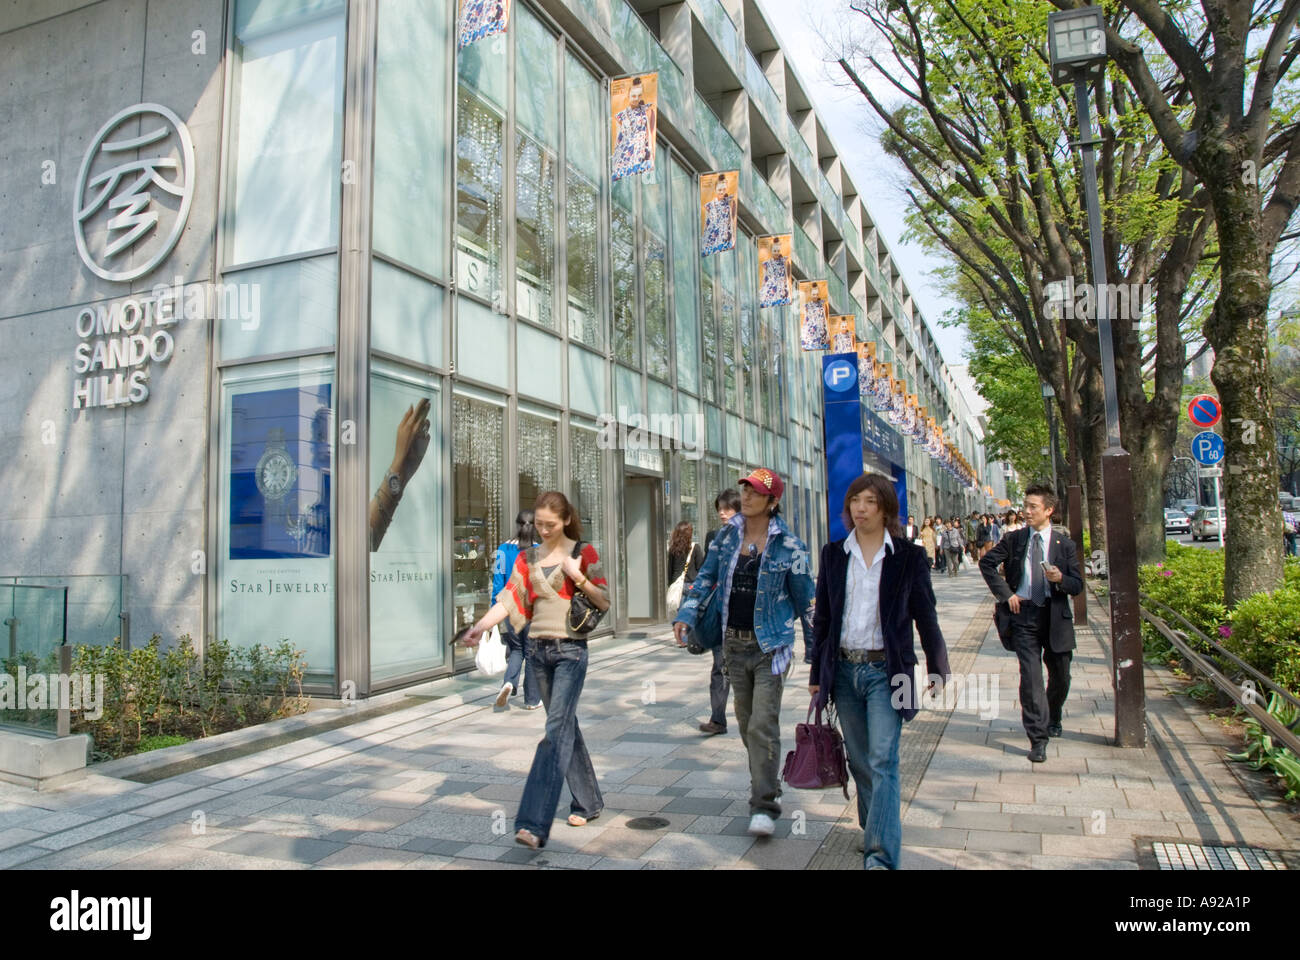 Sidewalk adjacent to Omotesando Hills new shopping and residential development in Tokyo Japan Stock Photo